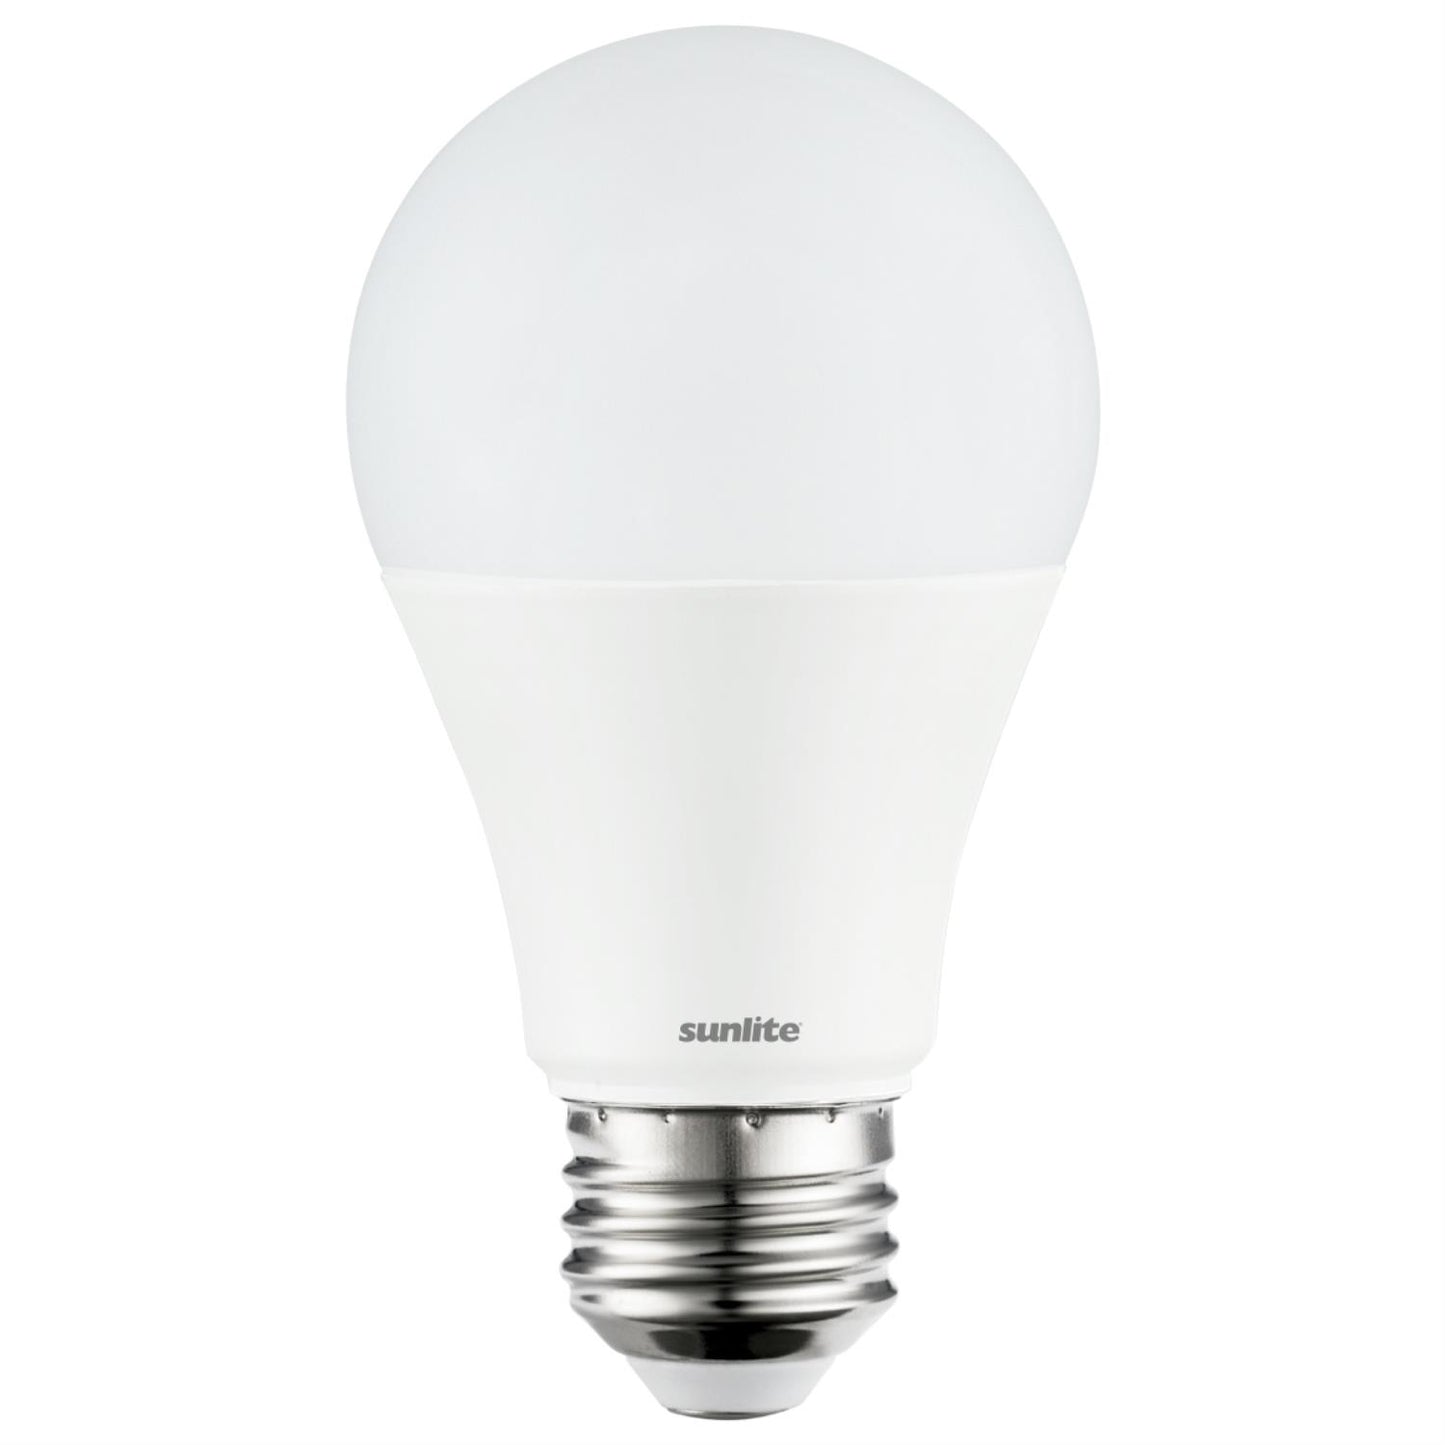 Sunlite 80599-SU LED A19 Super Bright Light Bulb, Dimmable, 14 Watt (100 Watt Equivalent), 1500 Lumens, Medium (E26) Base, UL Listed, 65K - Daylight 1 Pack